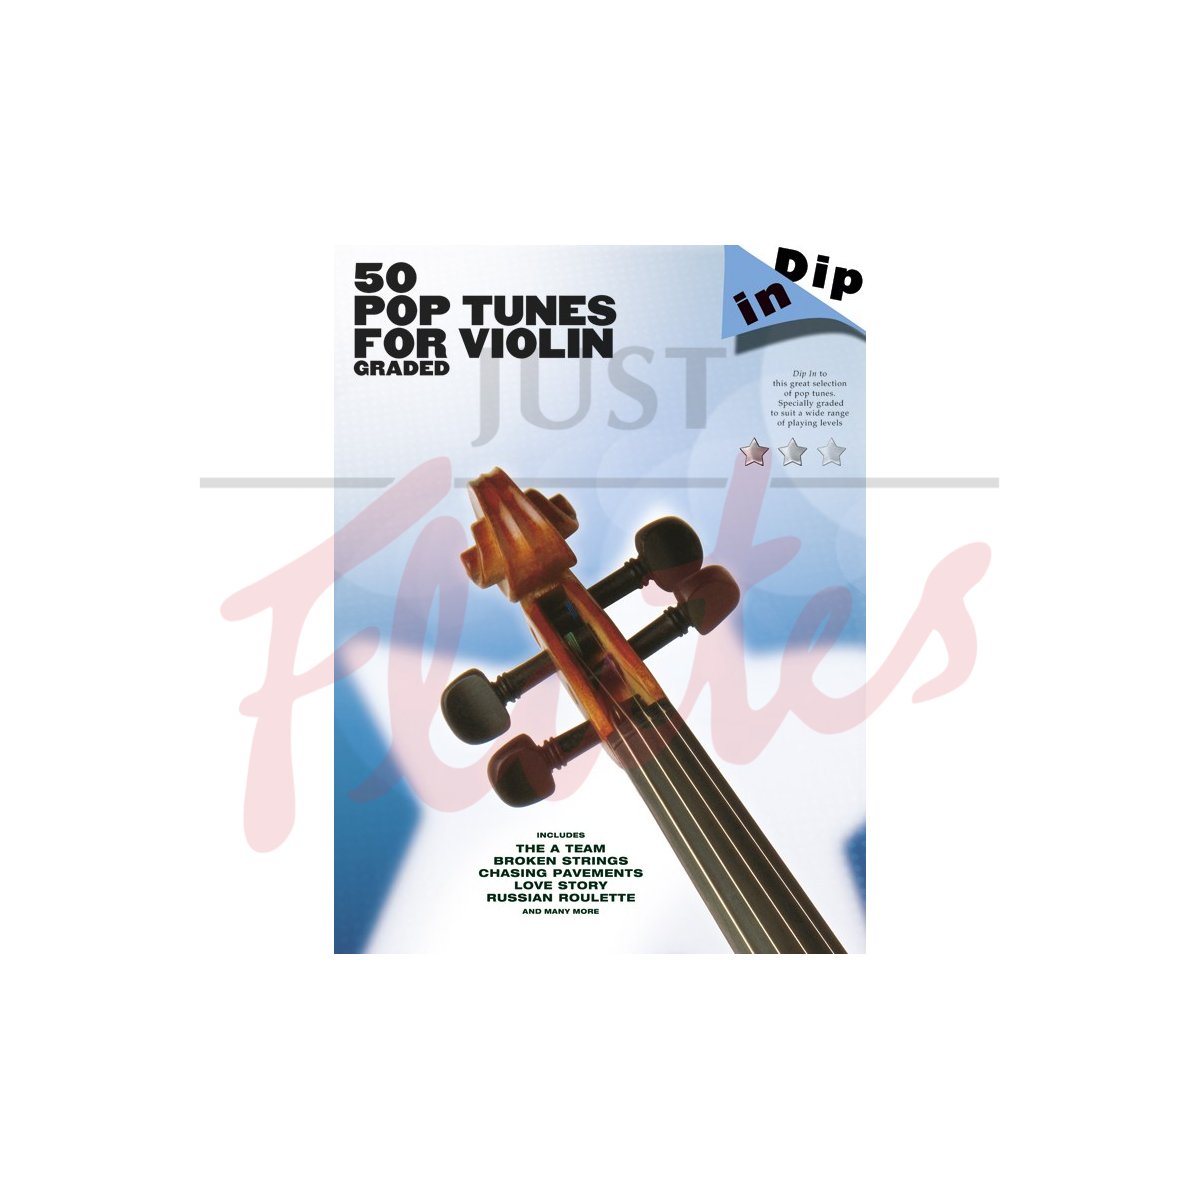 Dip In: 50 Pop Tunes for Violin